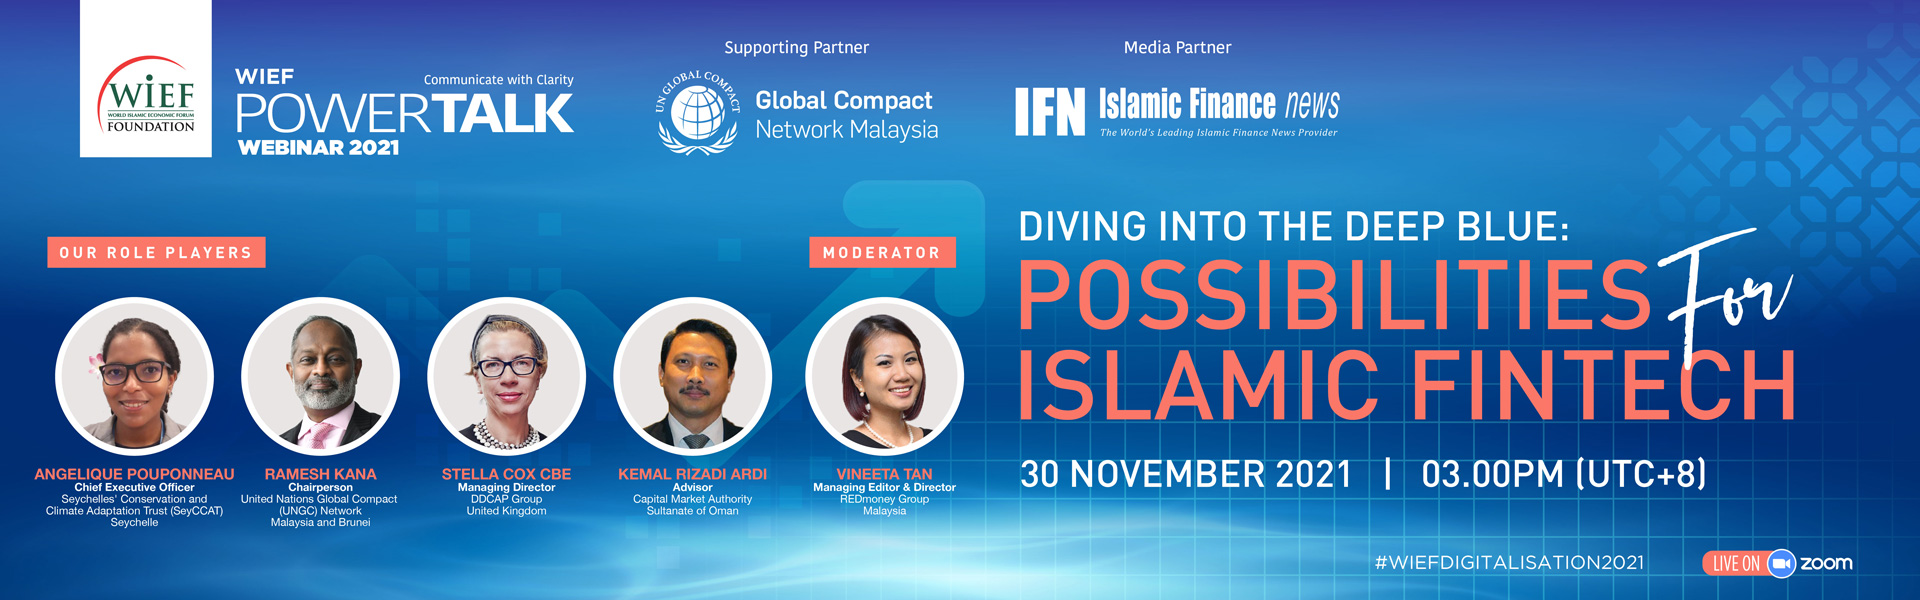 WIEF Powertalk – Possibilities for Islamic Fintech